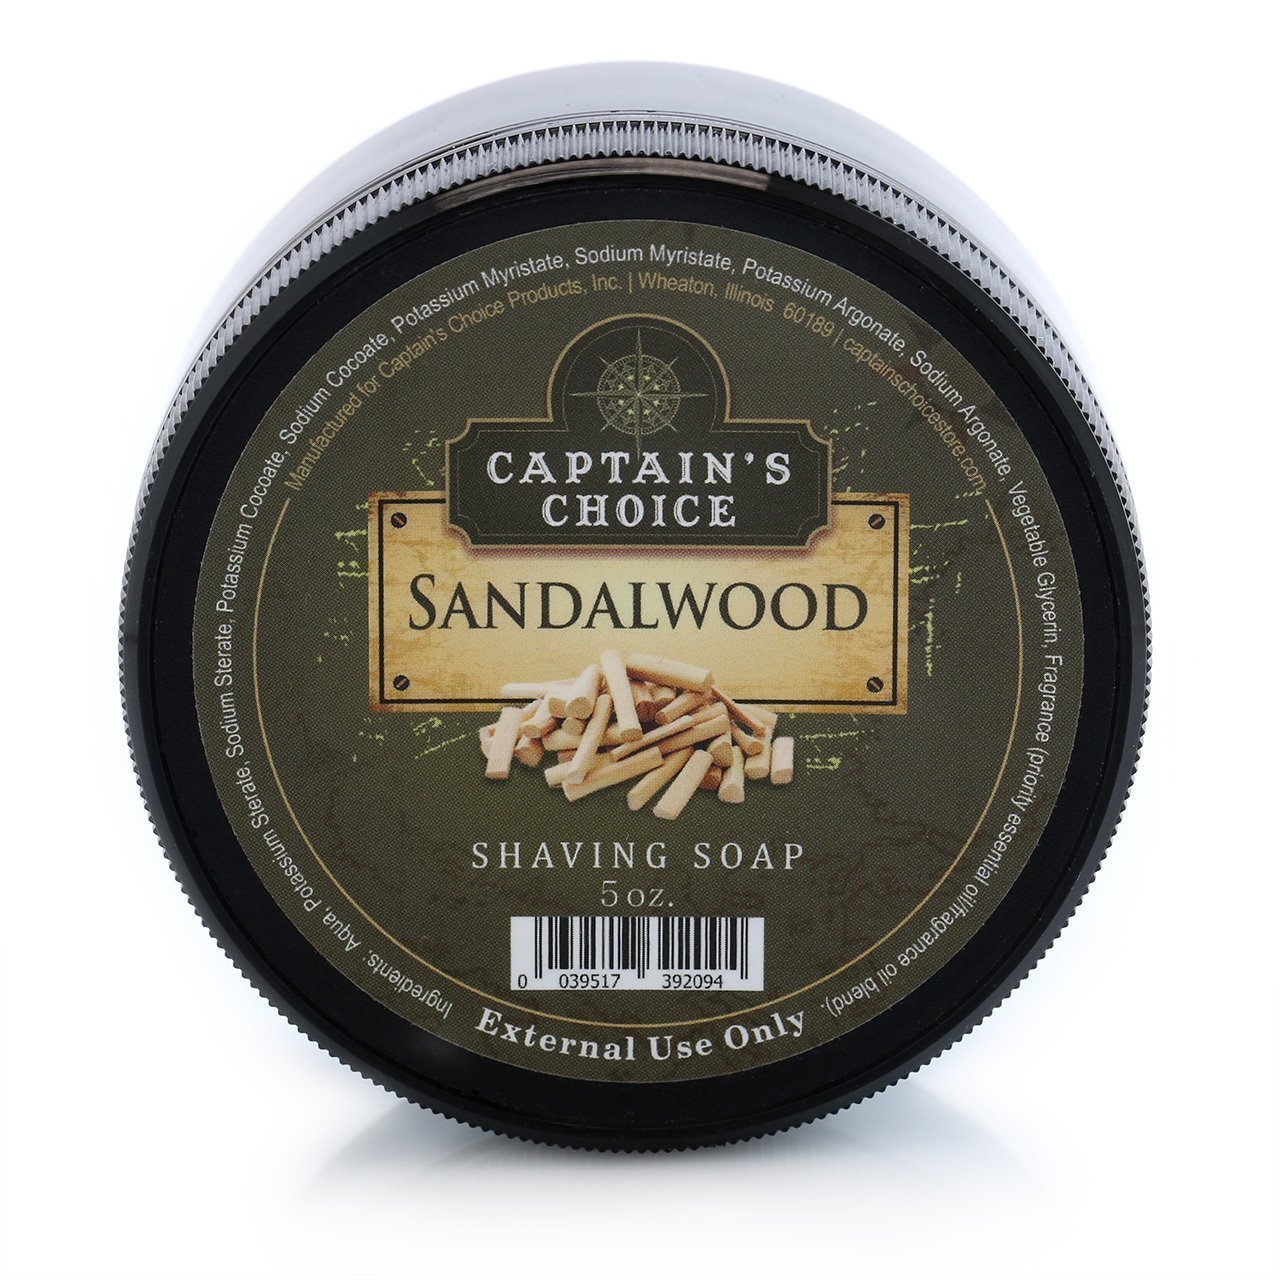 Captain's Choice Sandalwood Shaving Soap 5 oz